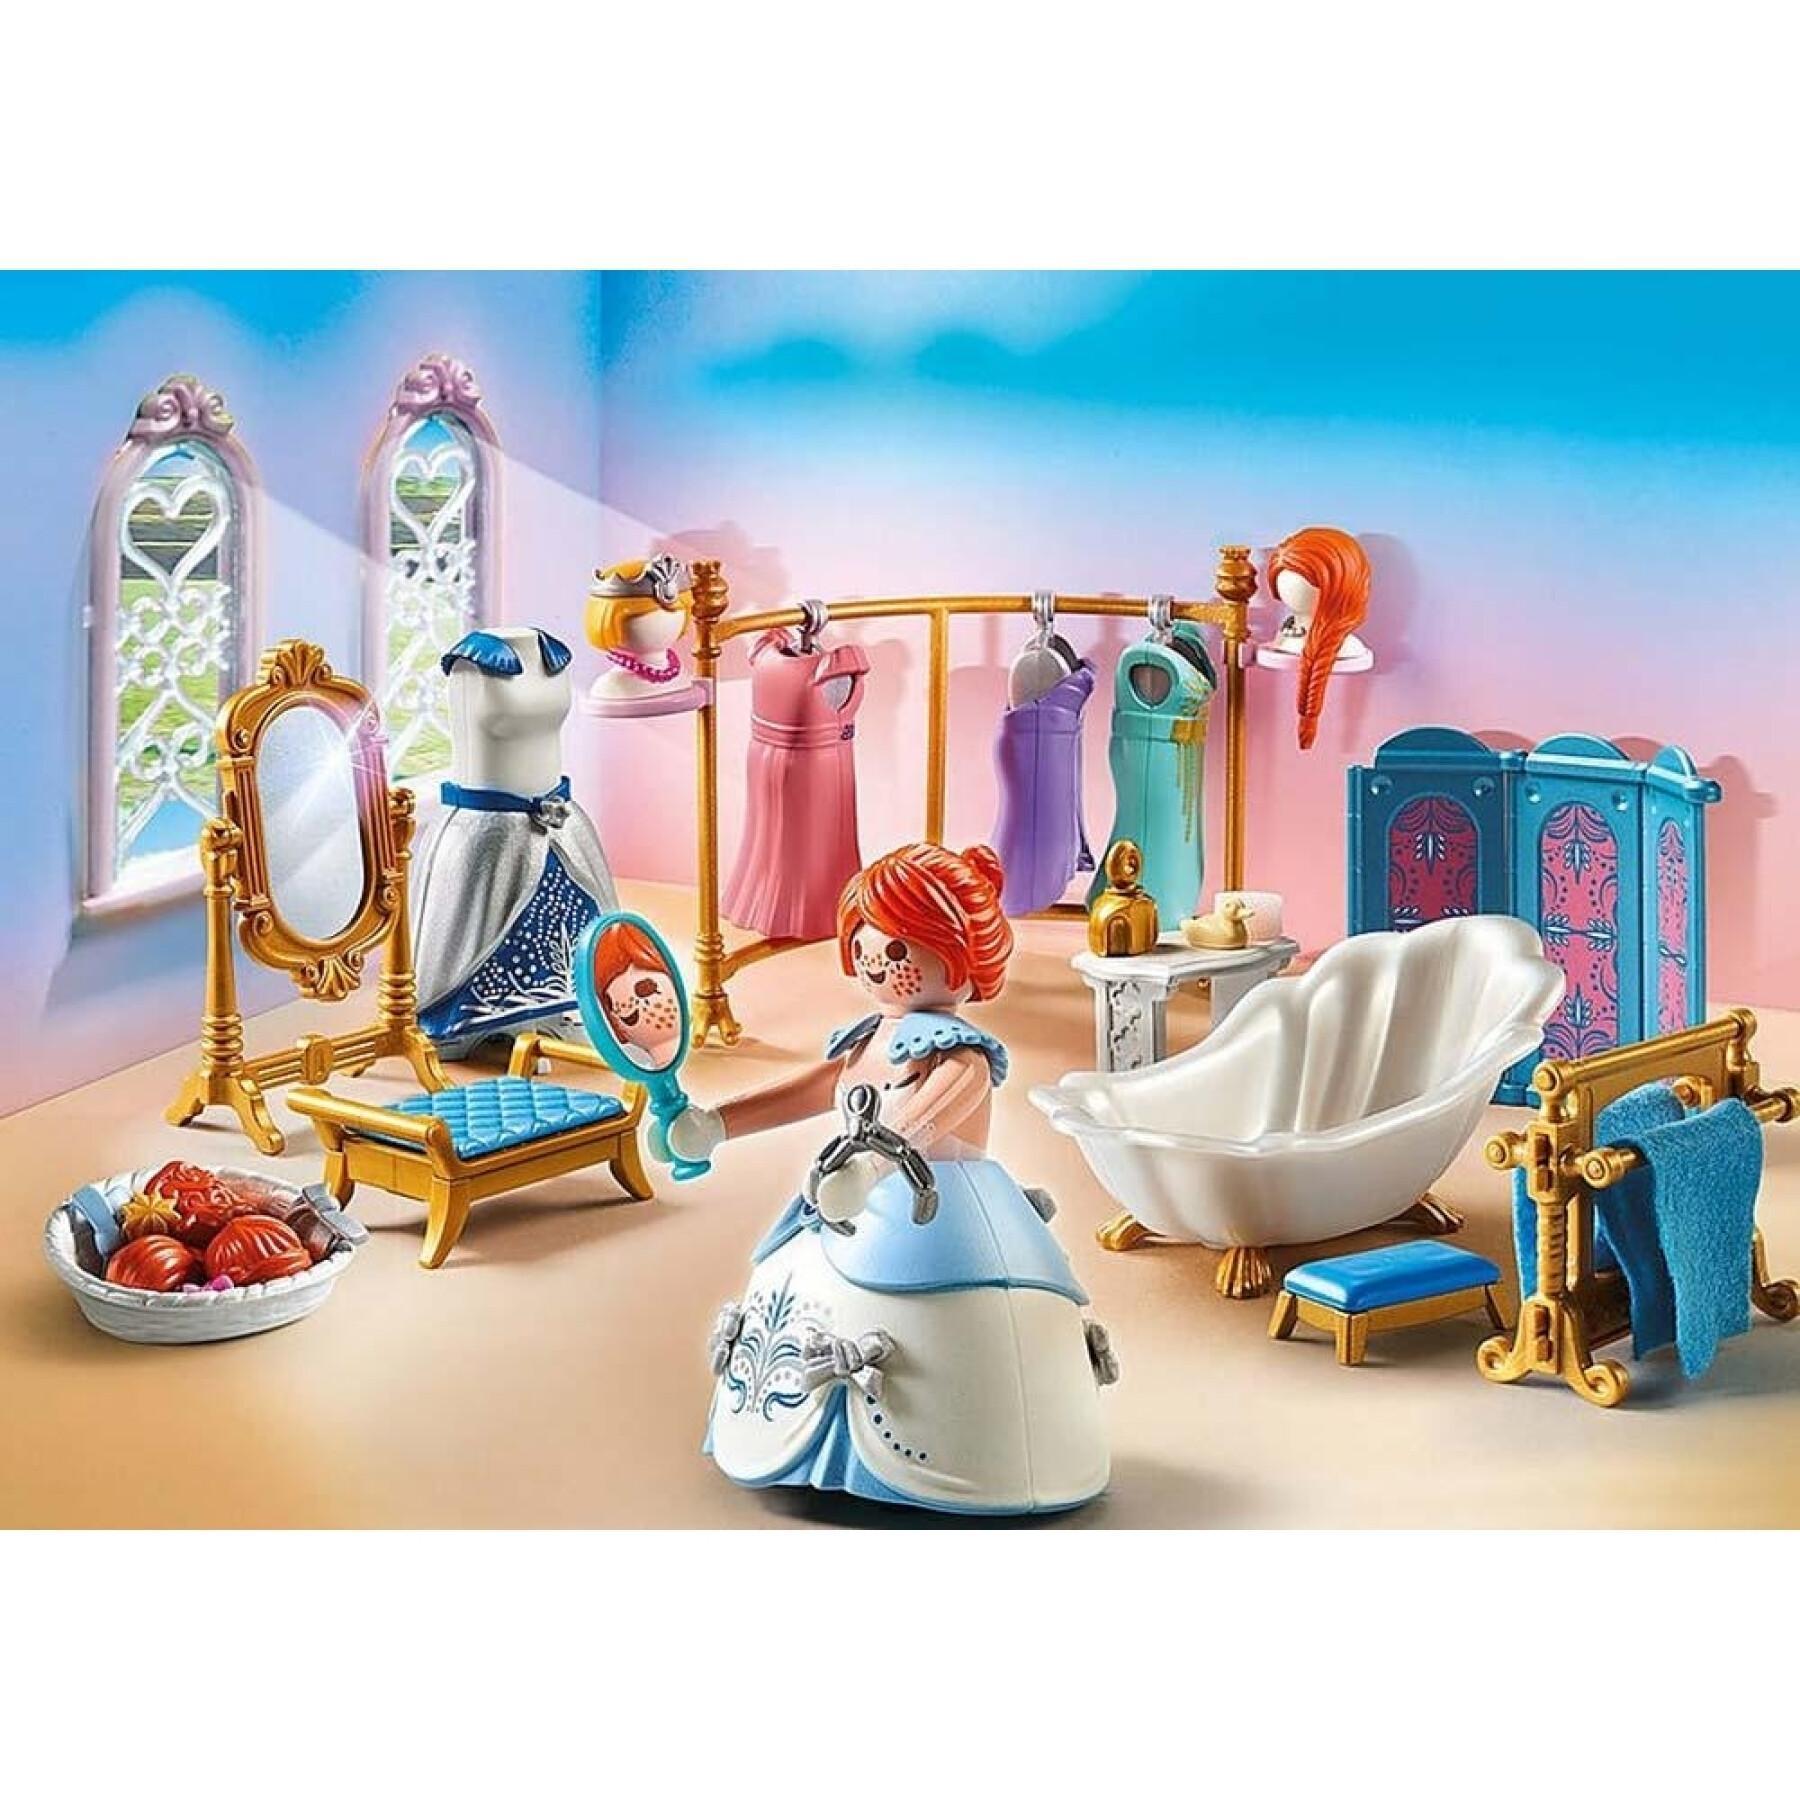 Dressing room princesses with bath Playmobil